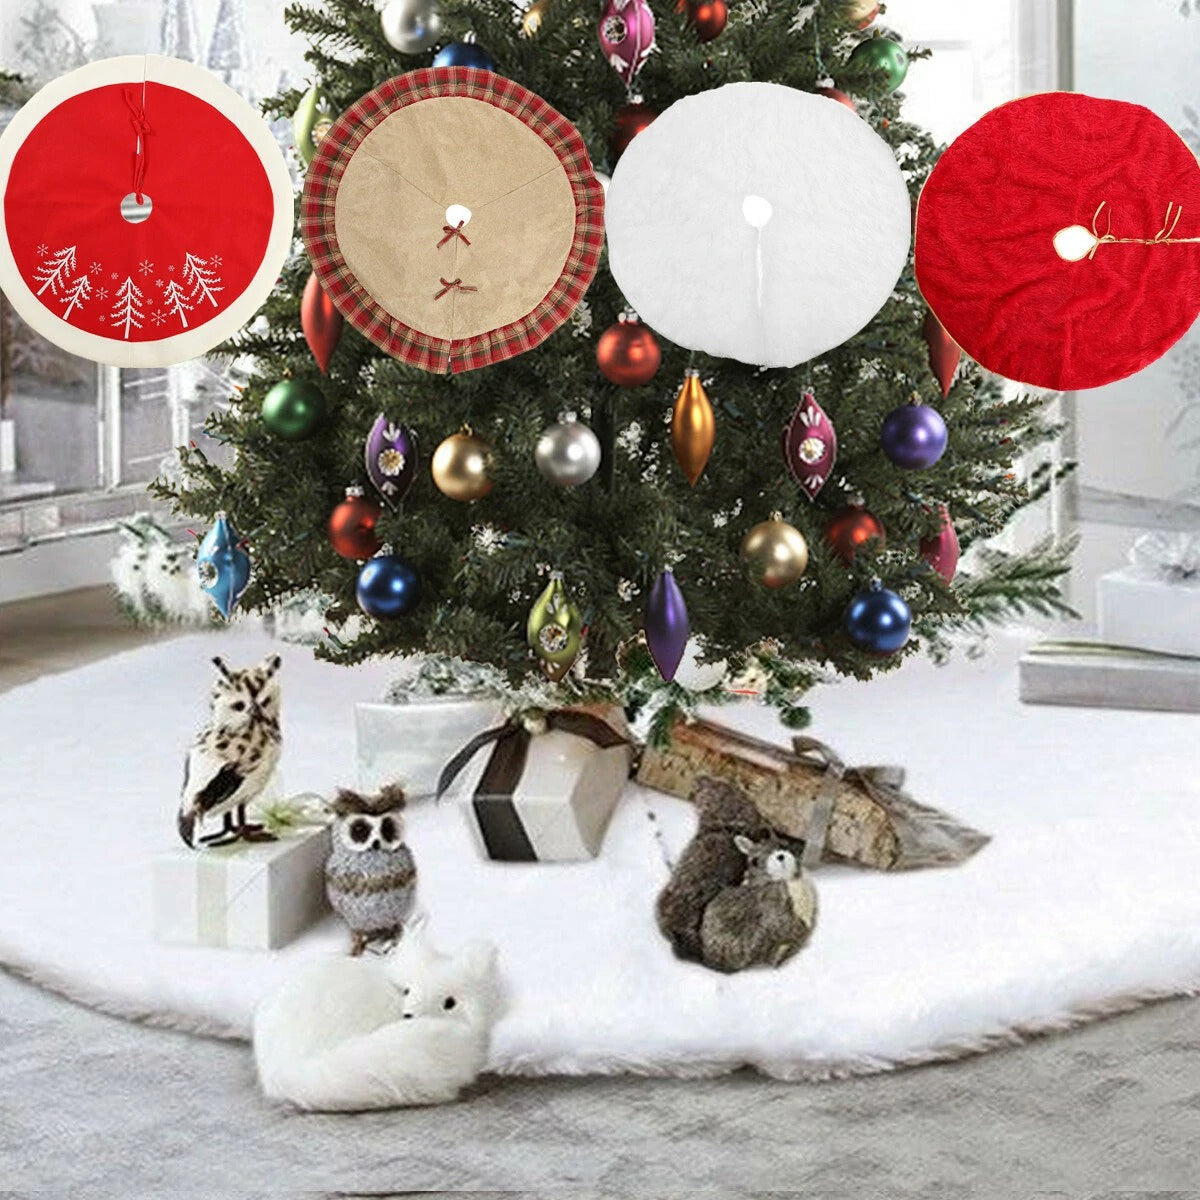 White Snowflake Plus Christmas Tree Skirt